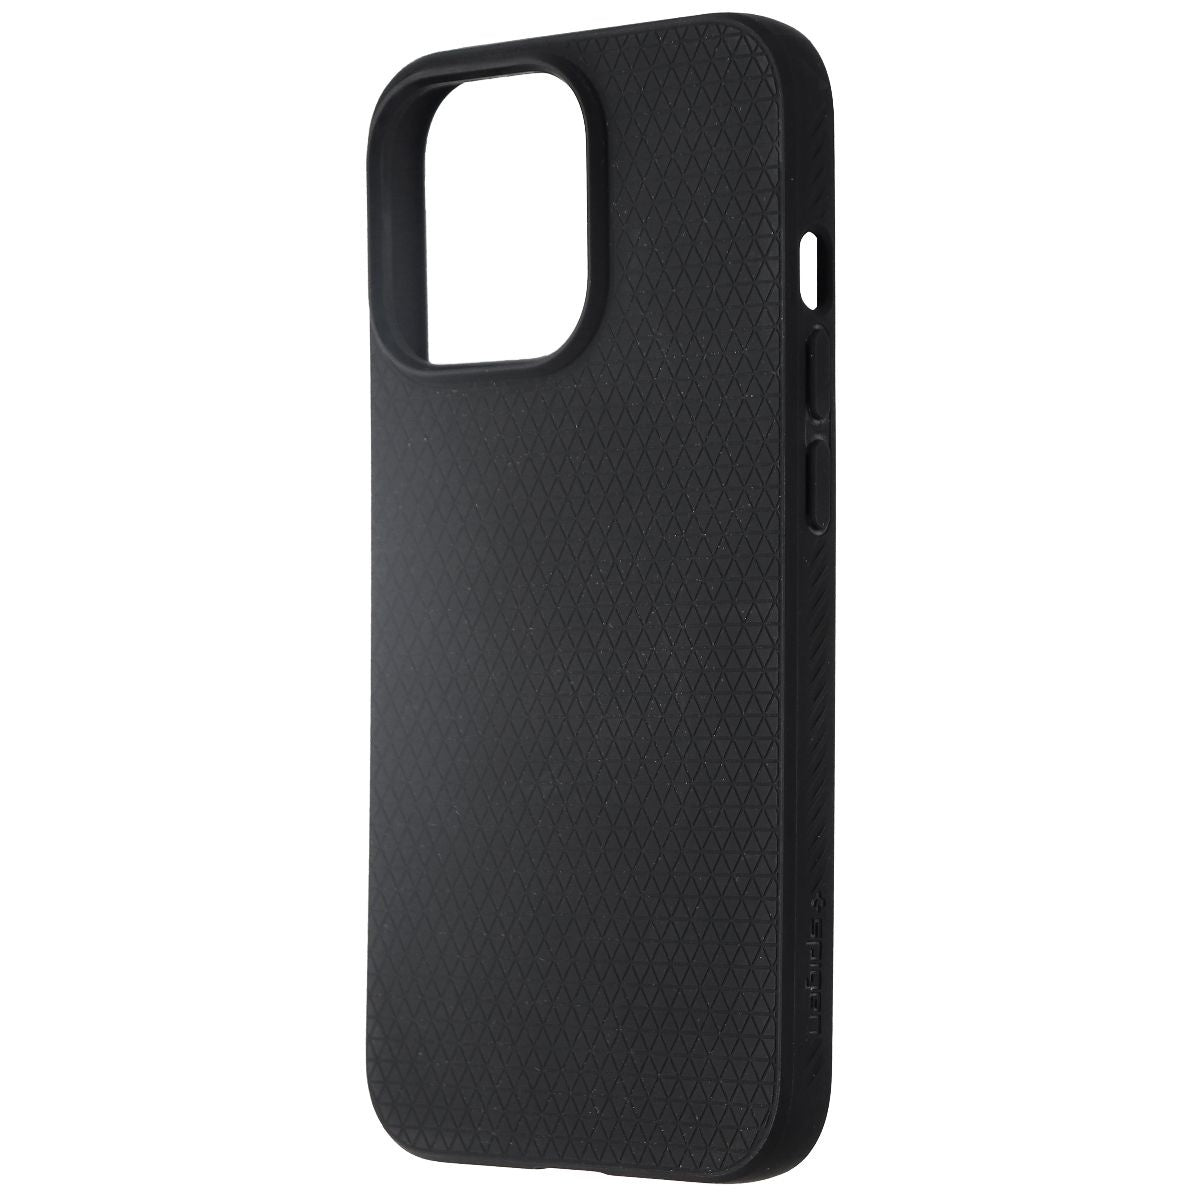 Spigen Liquid Air Armor Designed for iPhone 13 Pro Case (2021) - Matte Black Cell Phone - Cases, Covers & Skins Spigen    - Simple Cell Bulk Wholesale Pricing - USA Seller